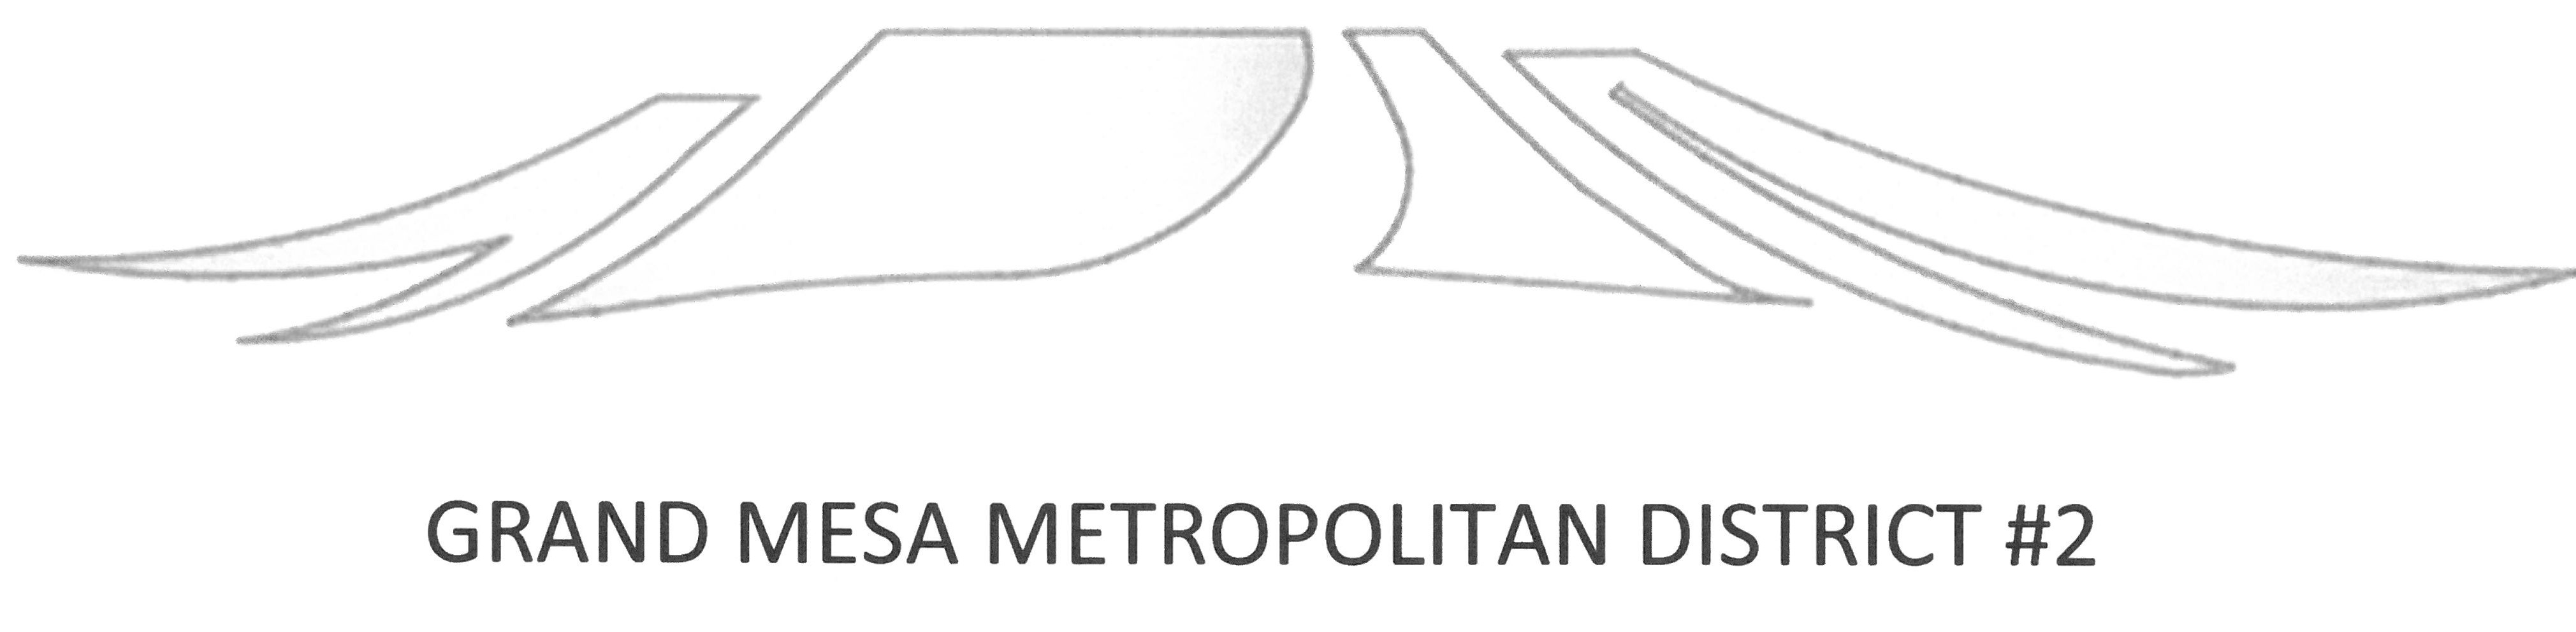 Organization logo of Grand Mesa Metropolitan District #2